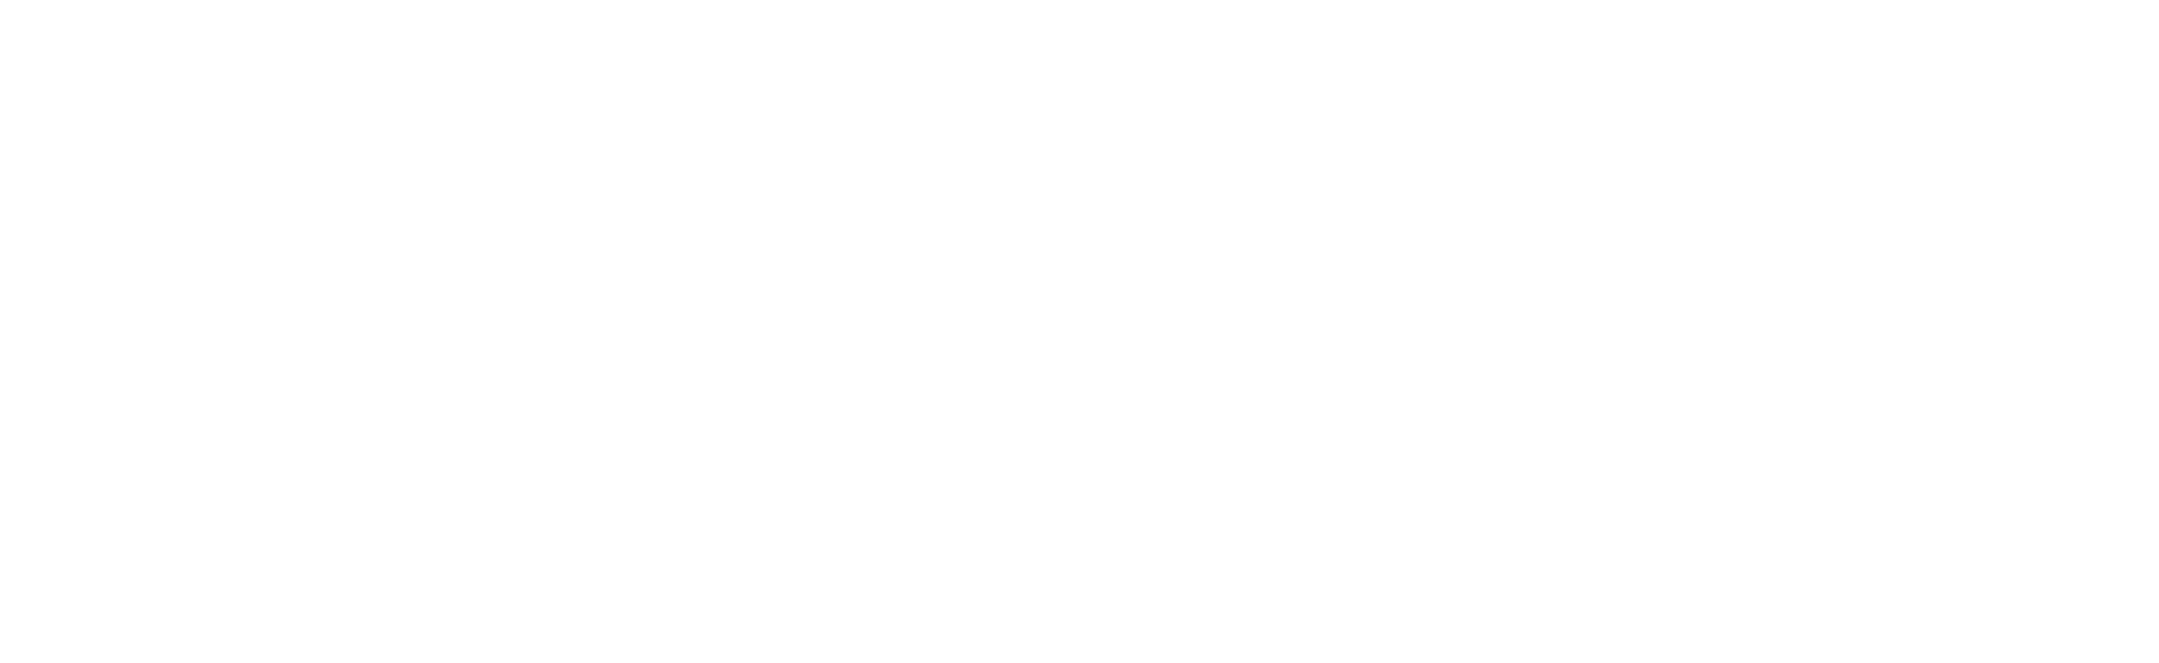 revevol-logo-white.png